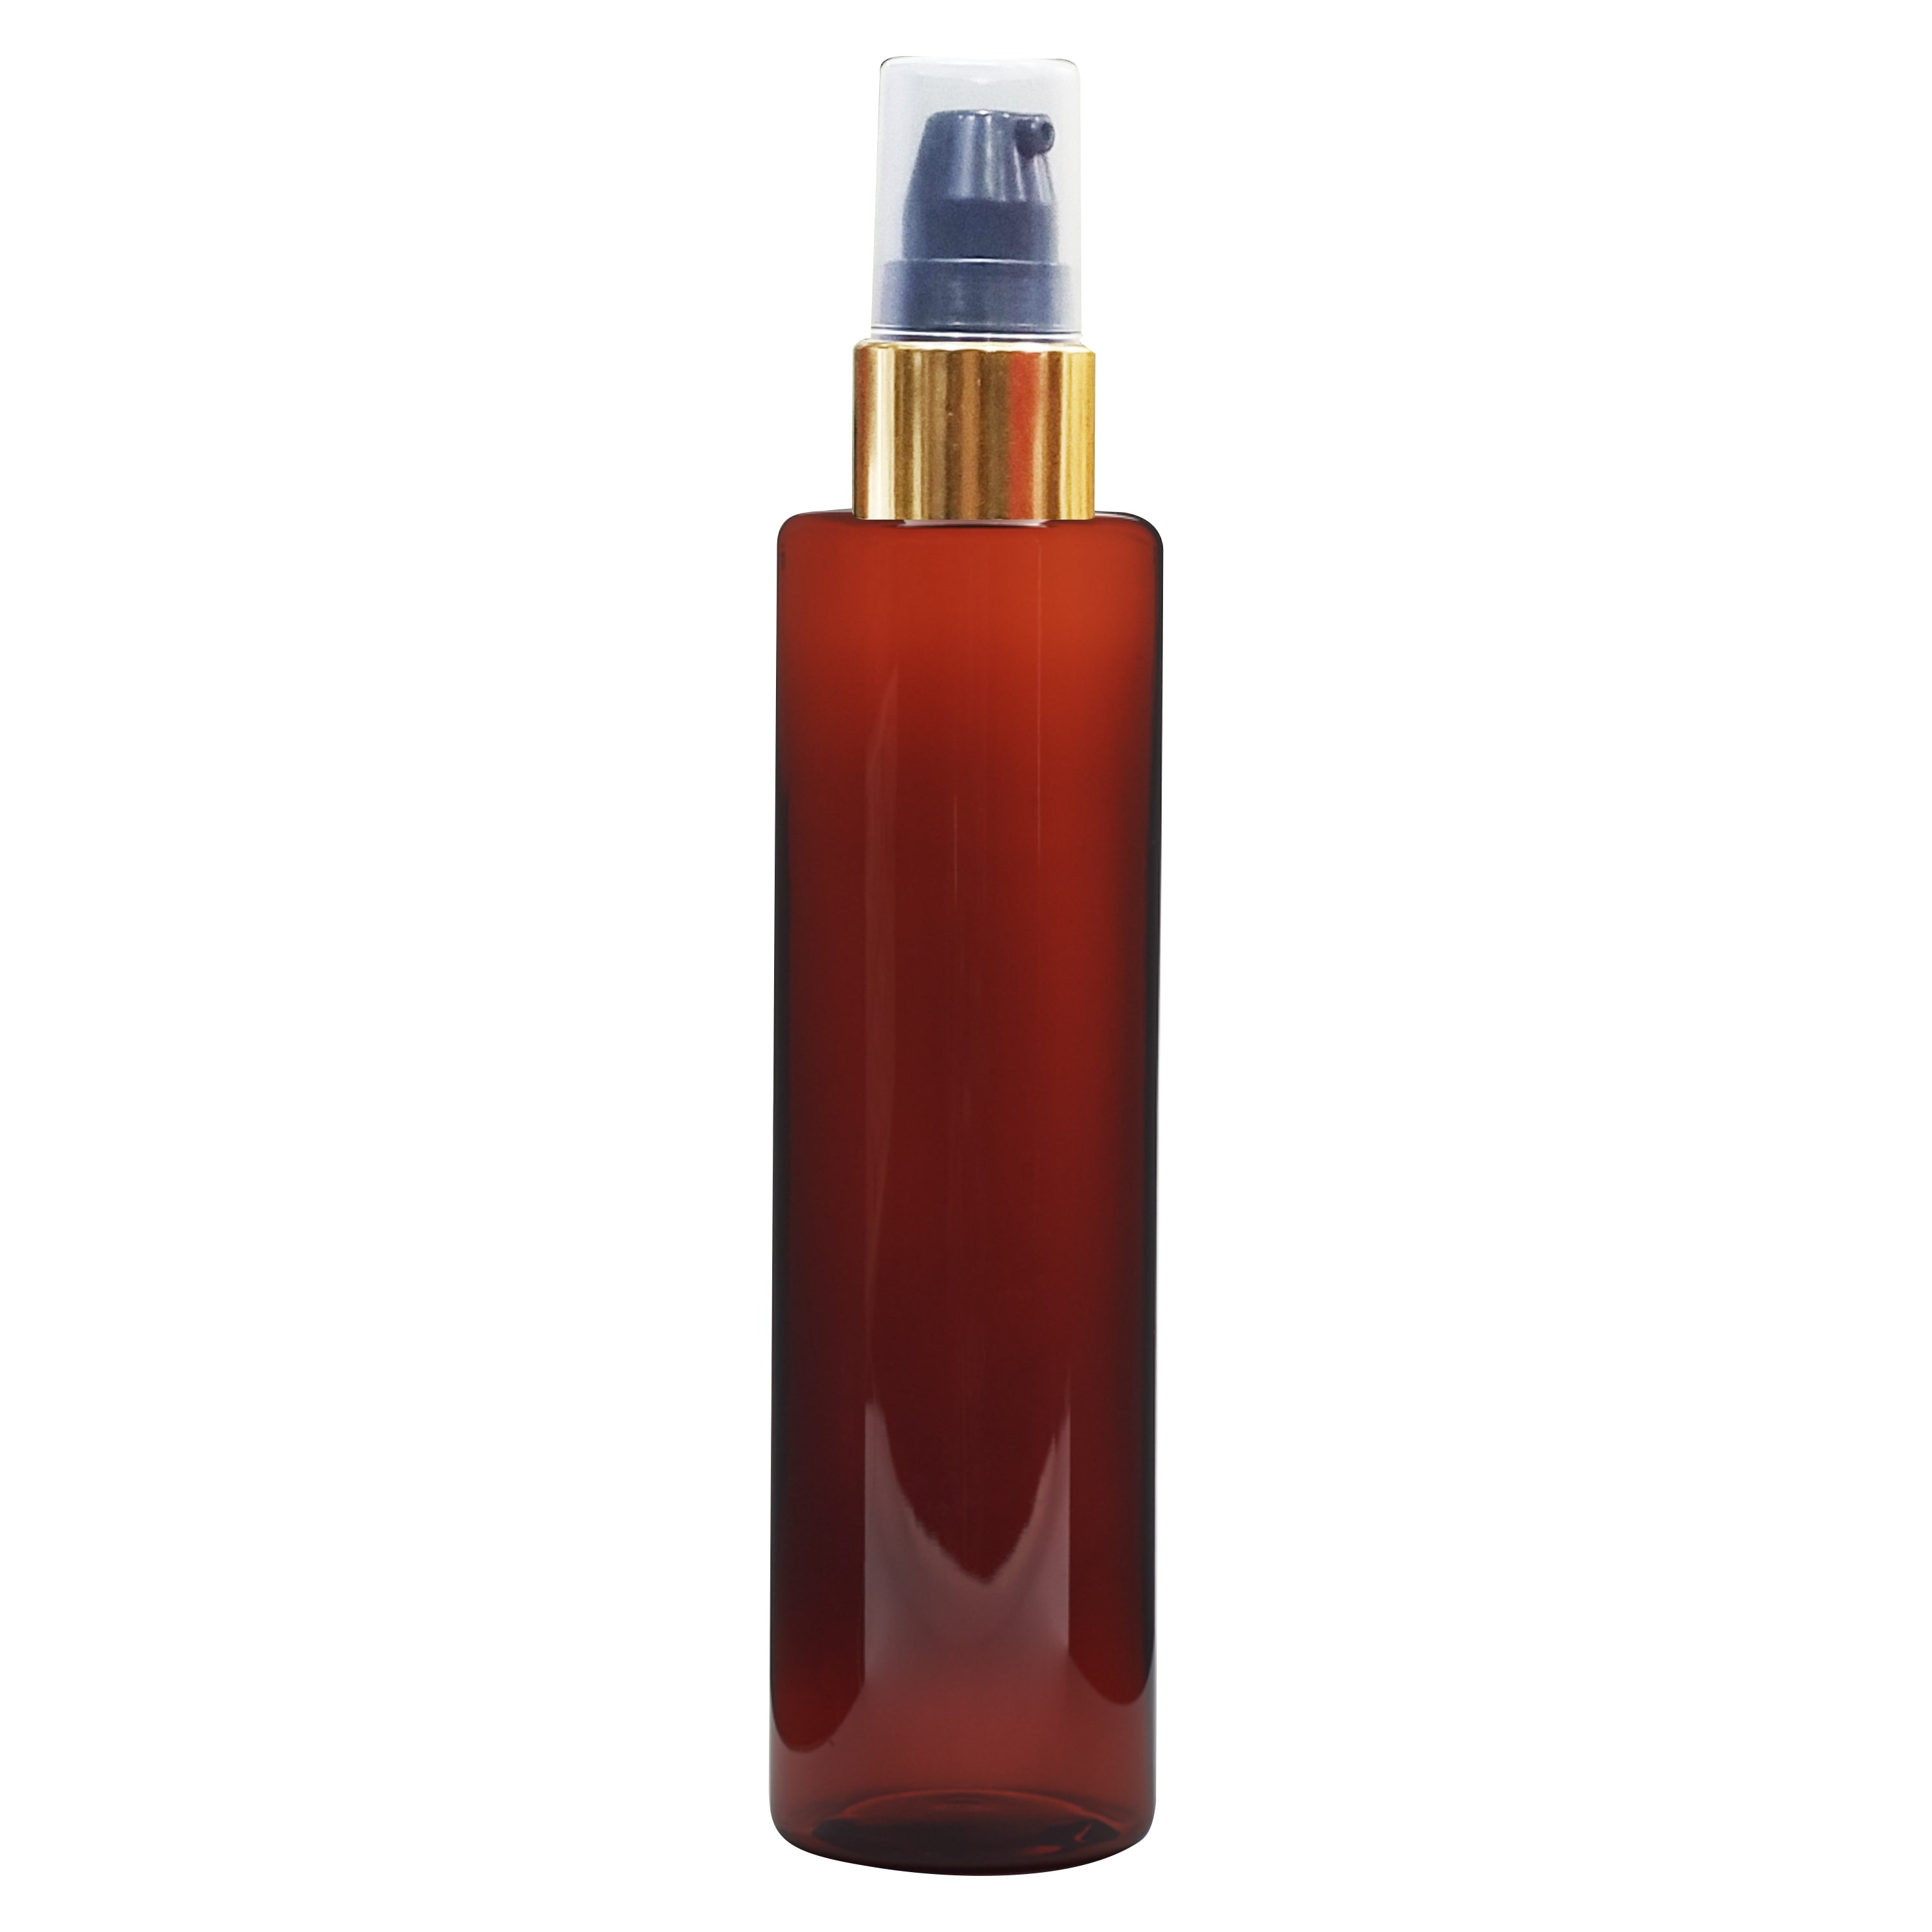 Amber Color Premium Empty Bottle with Golden Black Lotion Pump 100ML & 200ML [ZMA16]